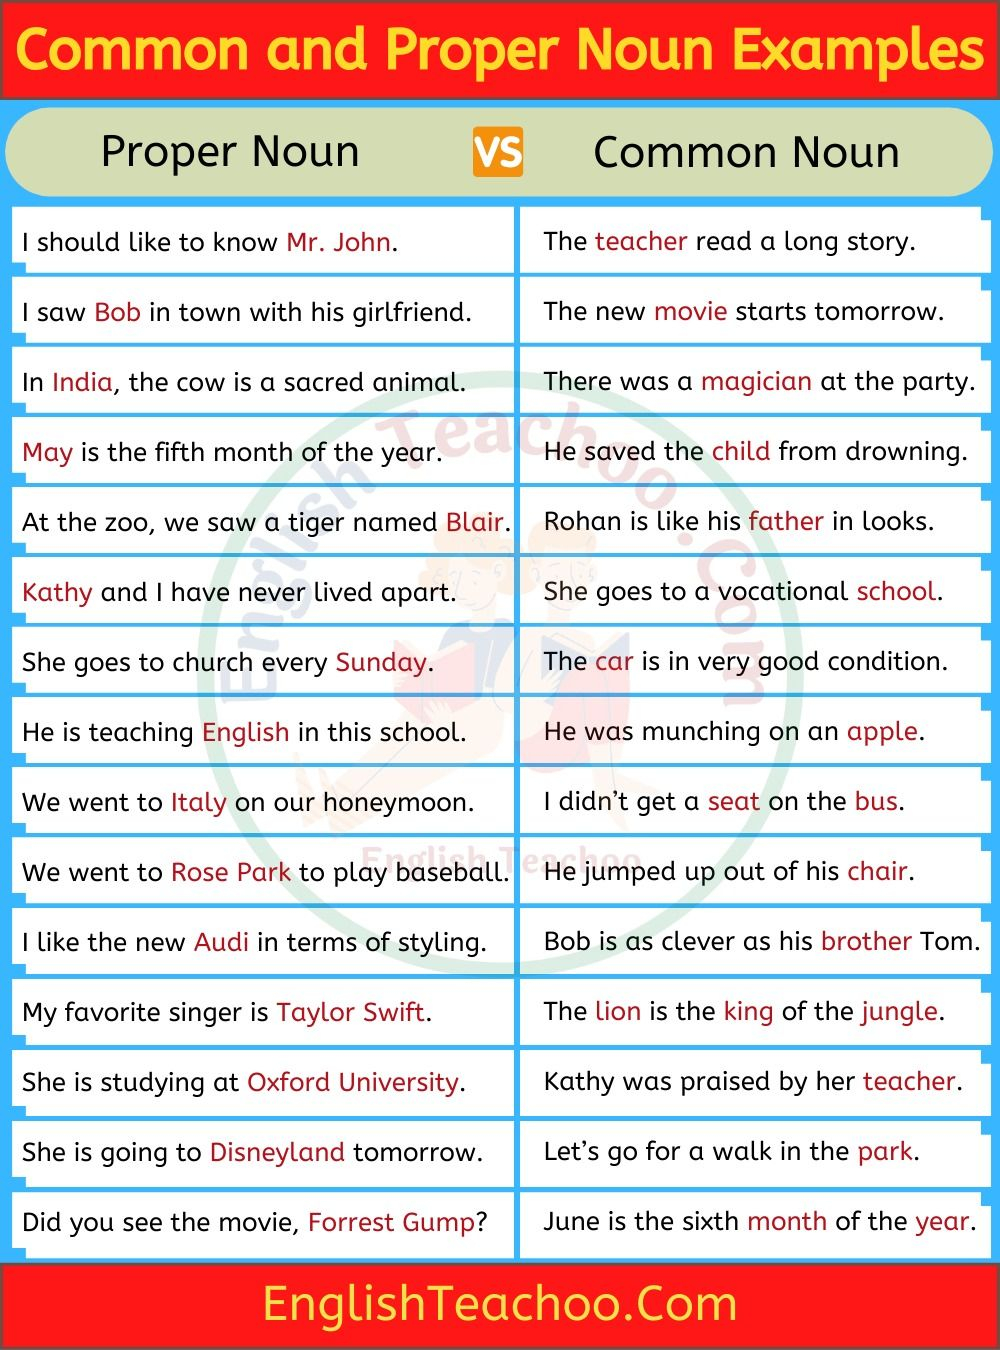 Common Noun And Proper Noun Examples English Grammar For Kids English 